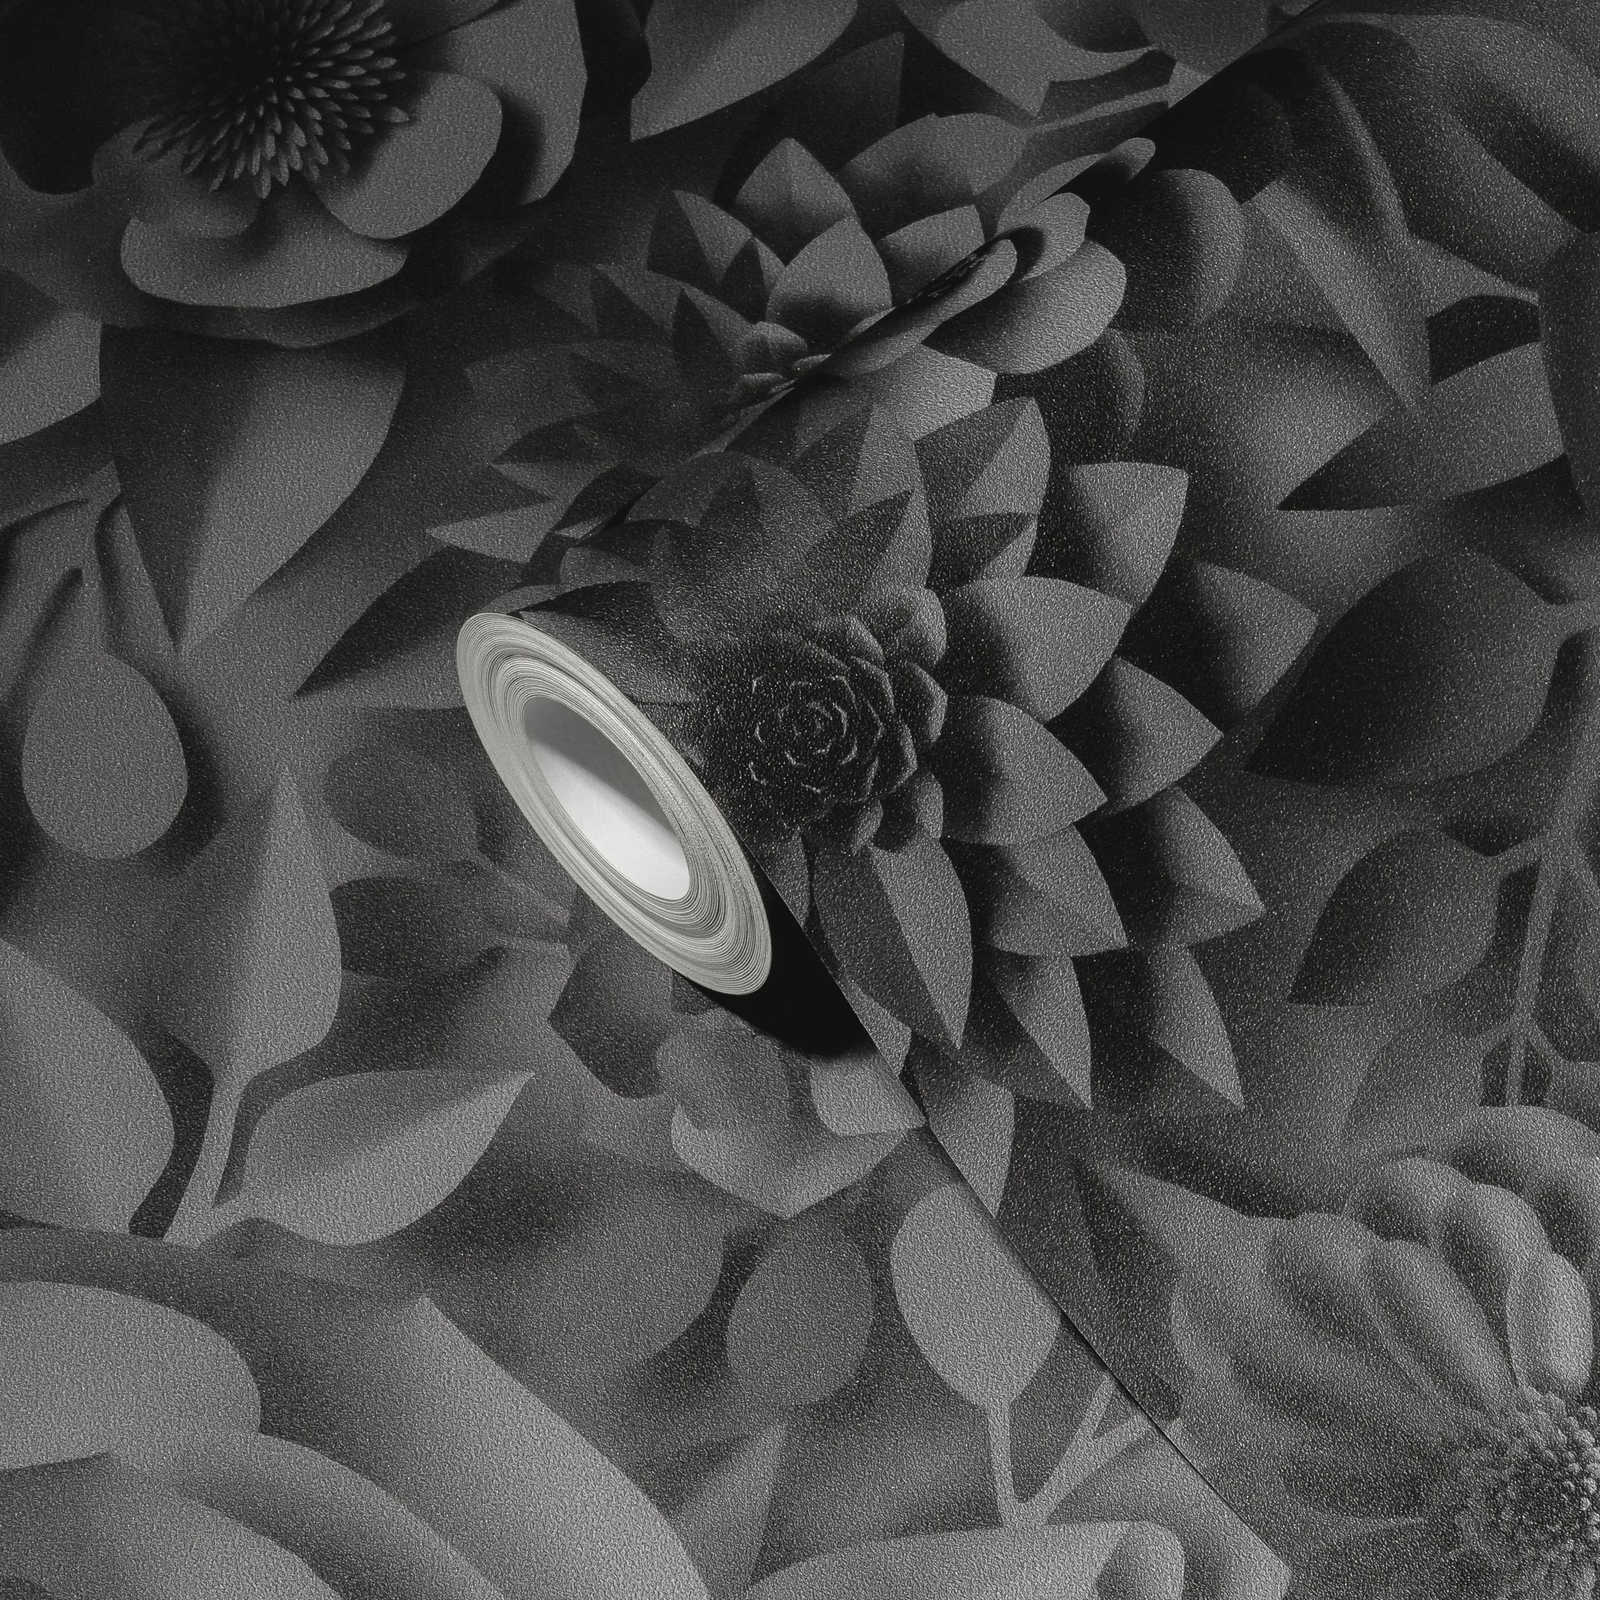             Papel pintado 3D flores - Gris, Negro
        